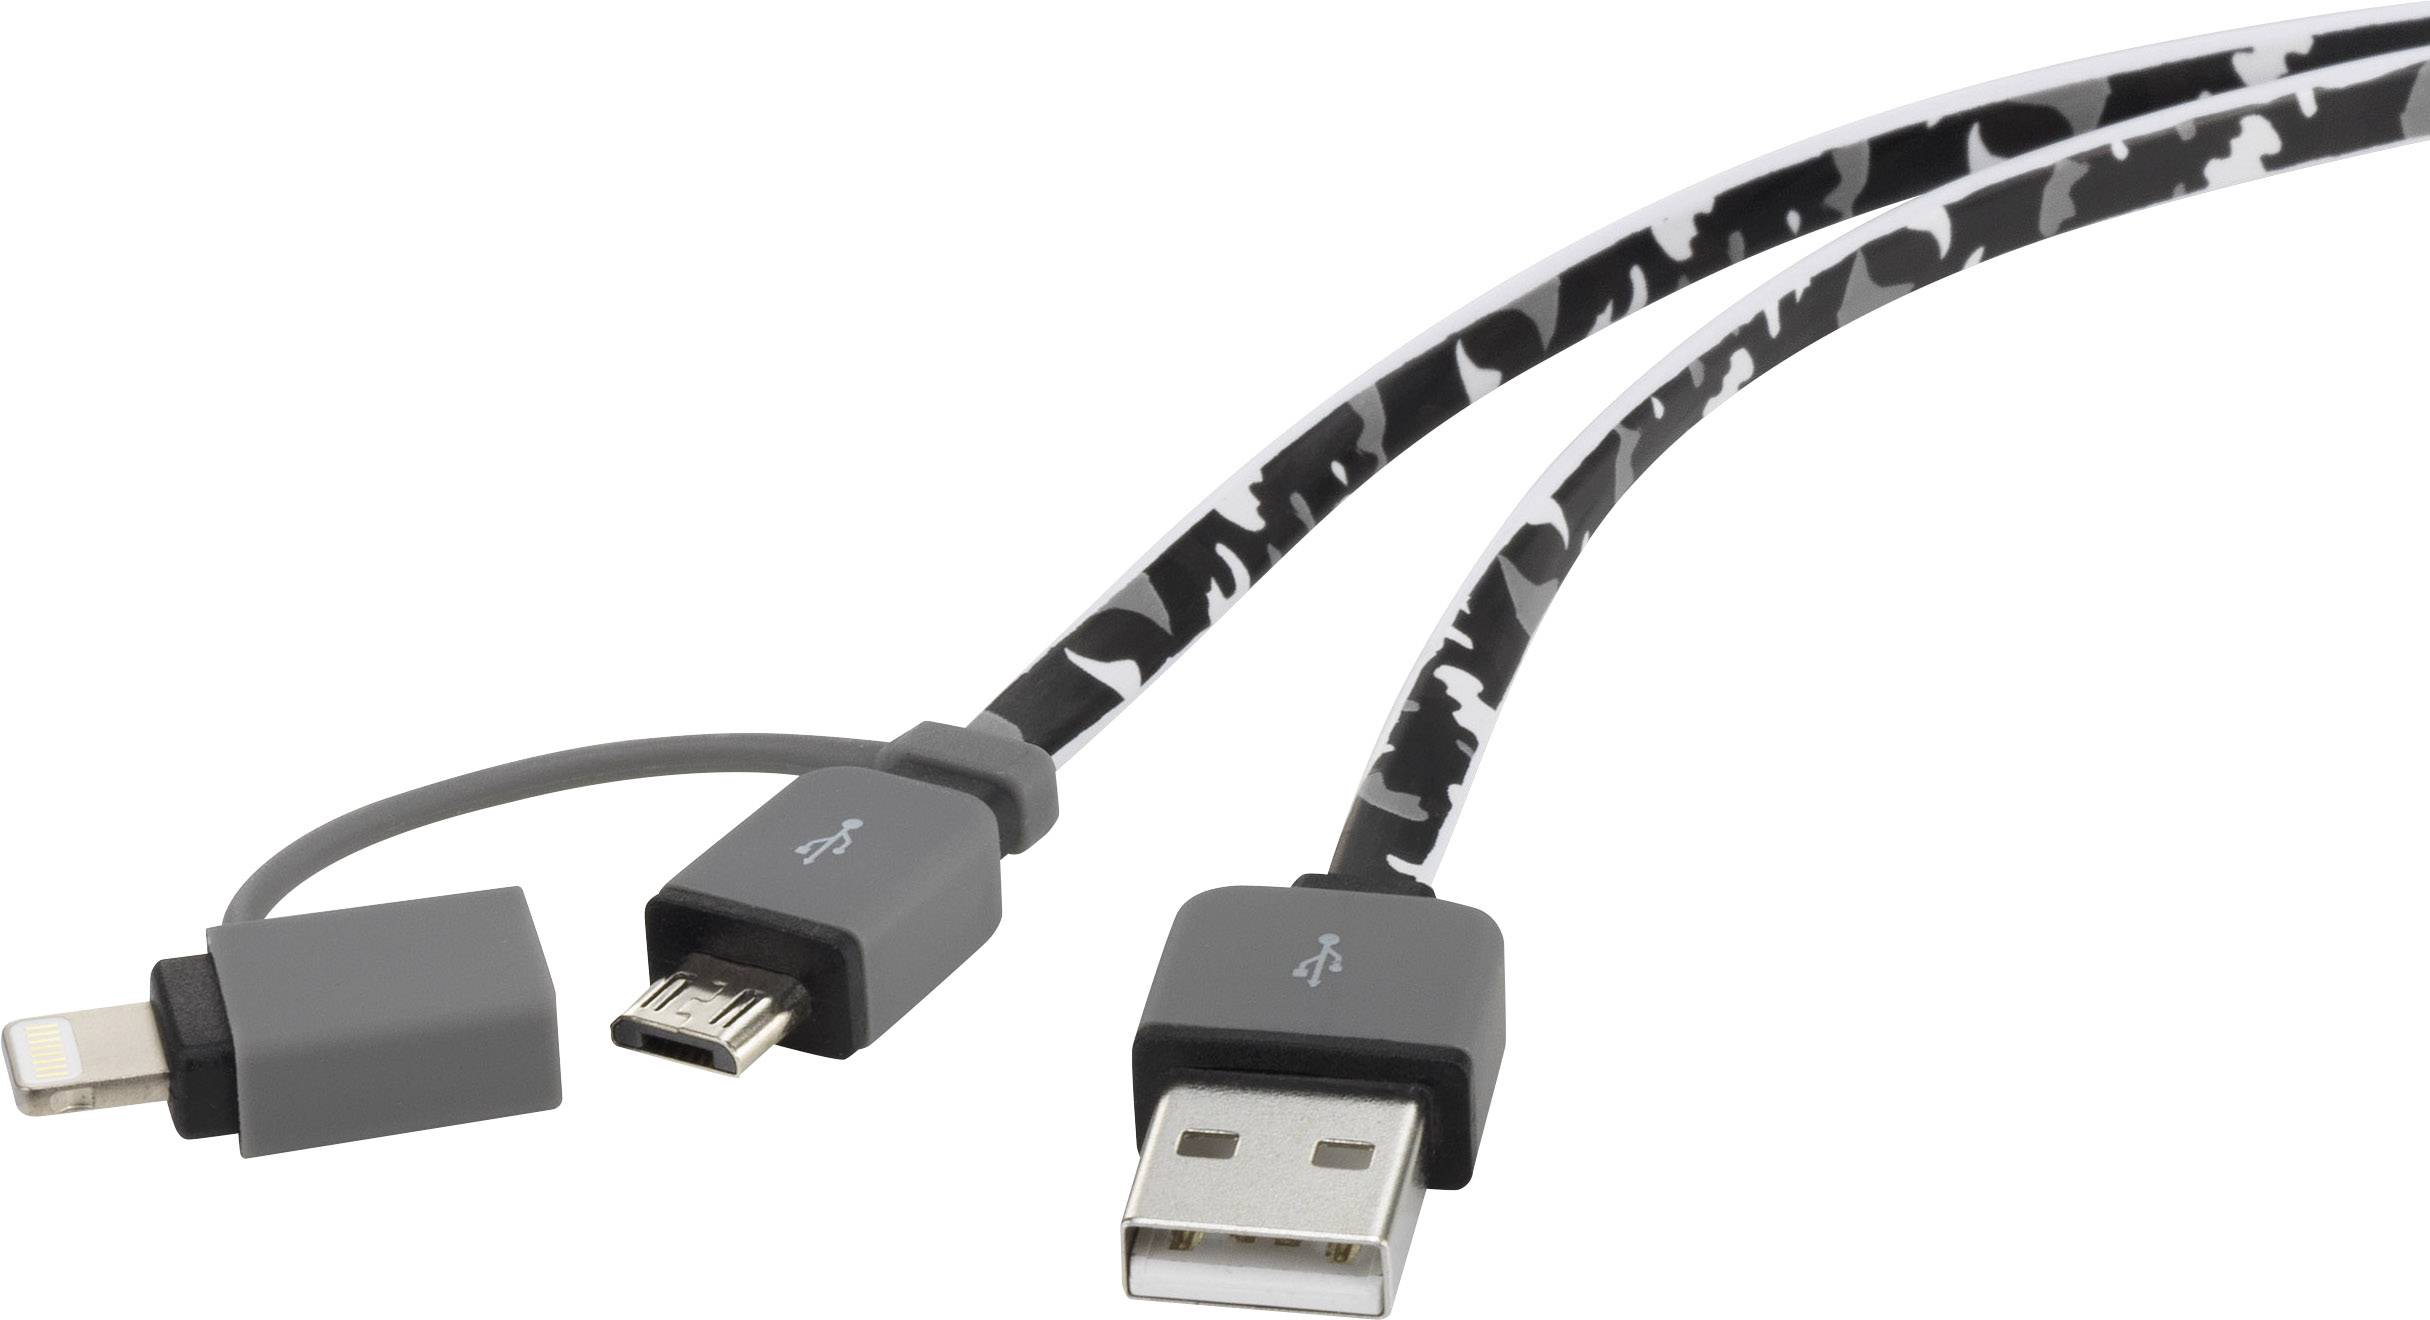 CONRAD Renkforce USB 2.0 Anschlusskabel [1x USB 2.0 Stecker A - 1x USB 2.0 Stecker Micro-B, Apple Do